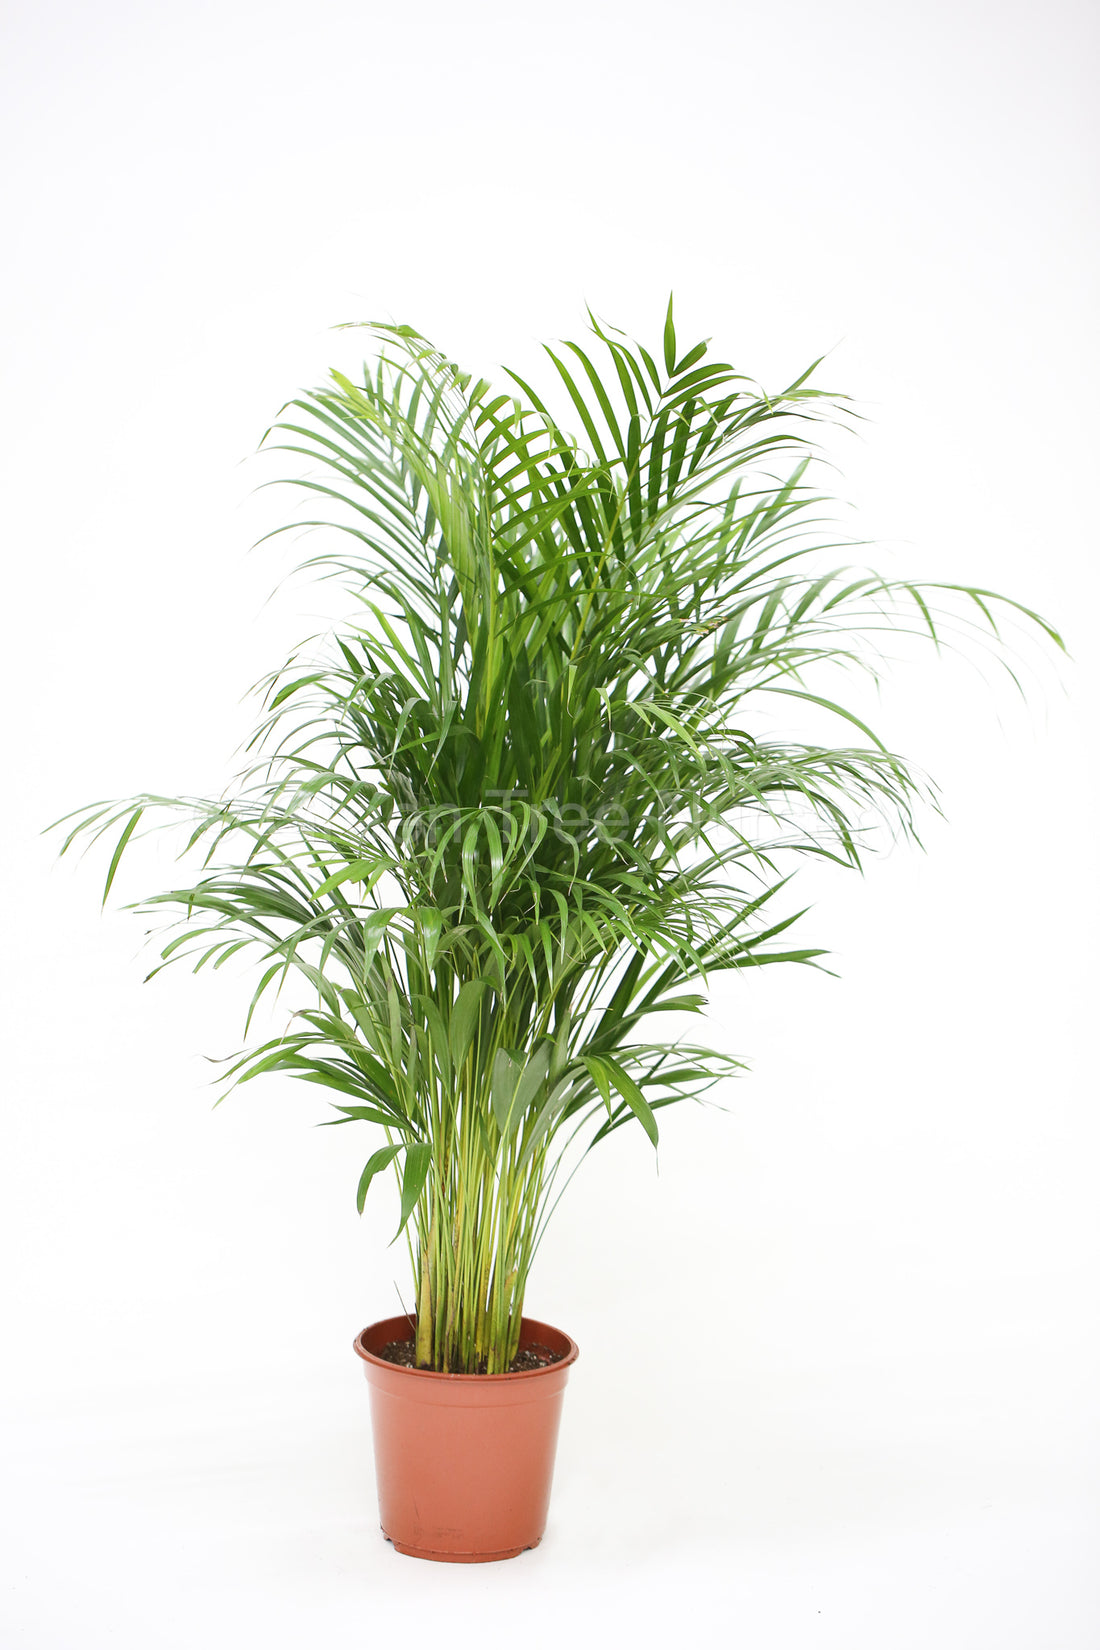 Dypsis Lutescens (Areca Palm) 125 cm